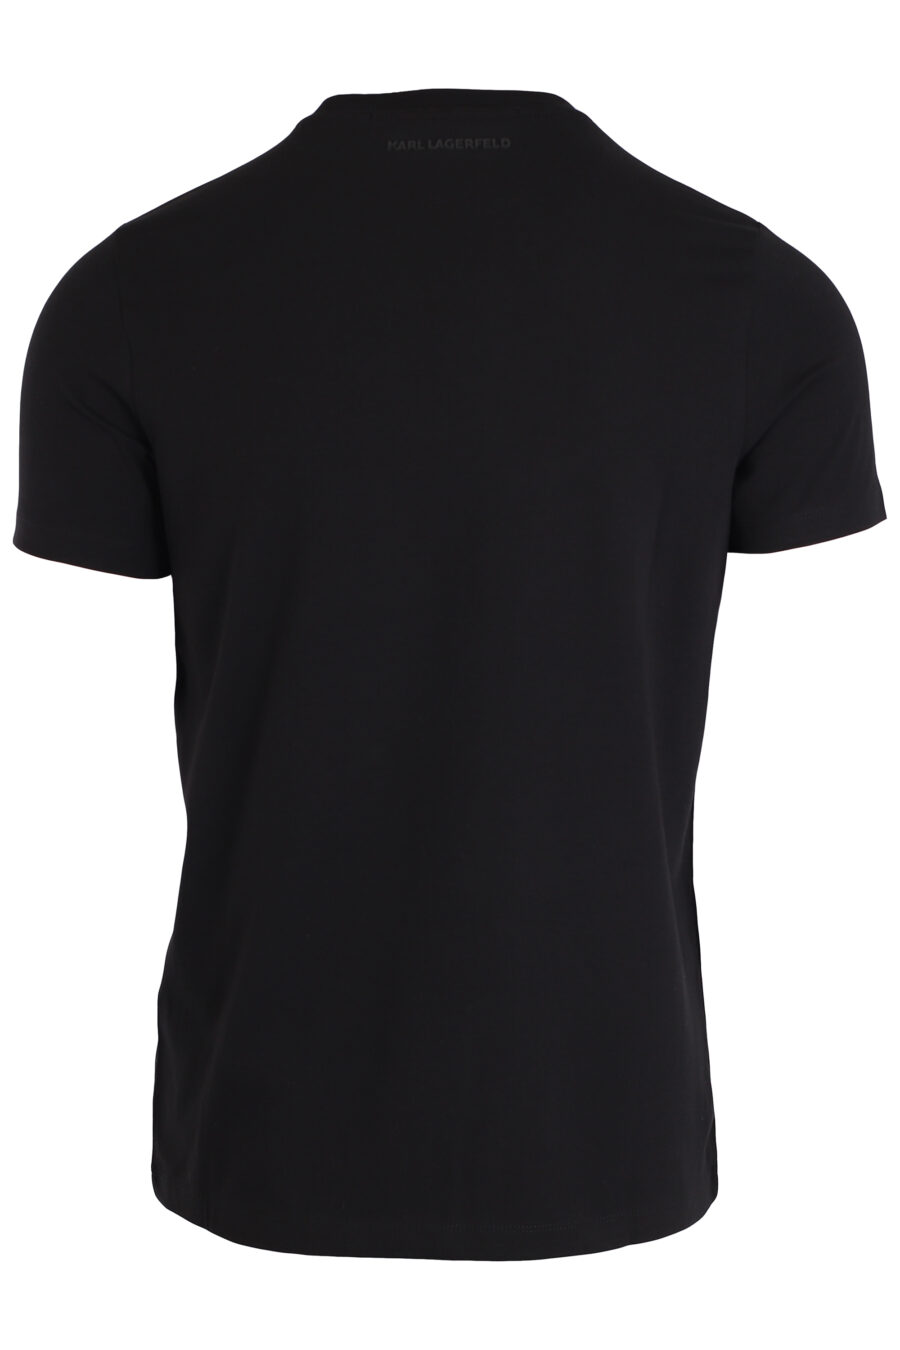 Camiseta negra con logo "ikonik" - IMG 3977